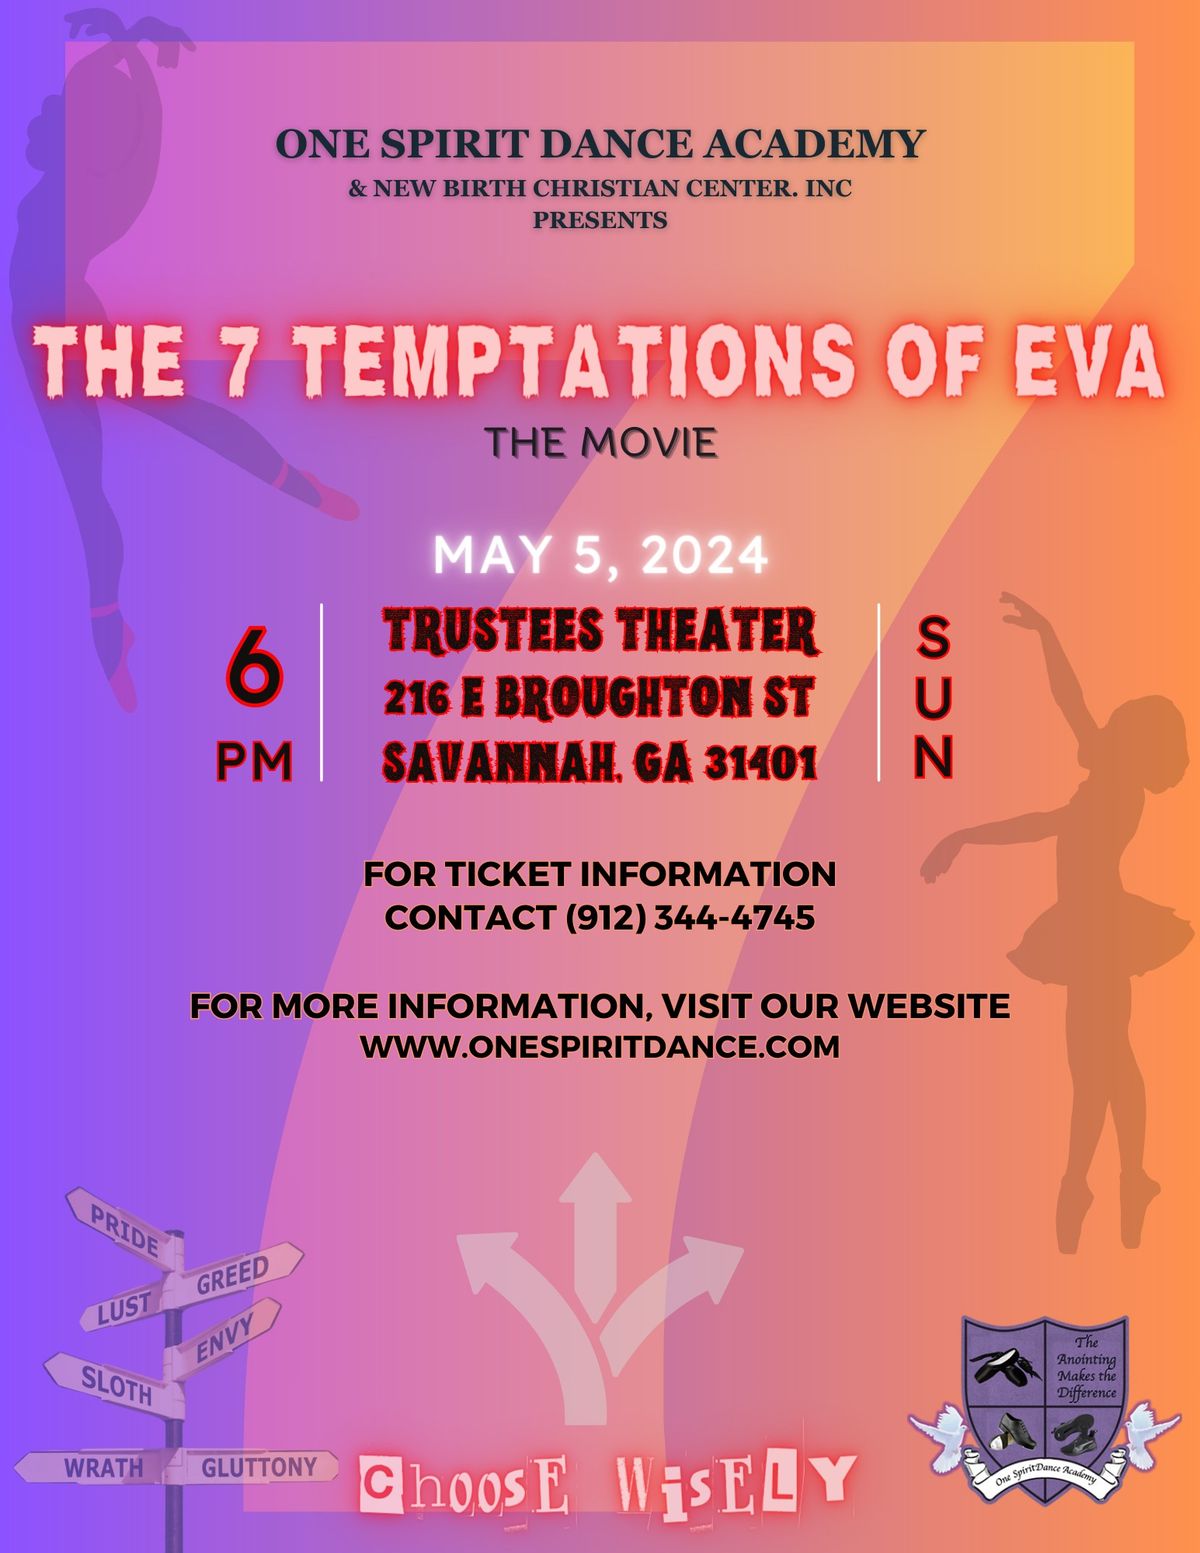 The 7 Temptations of Eva: The Movie